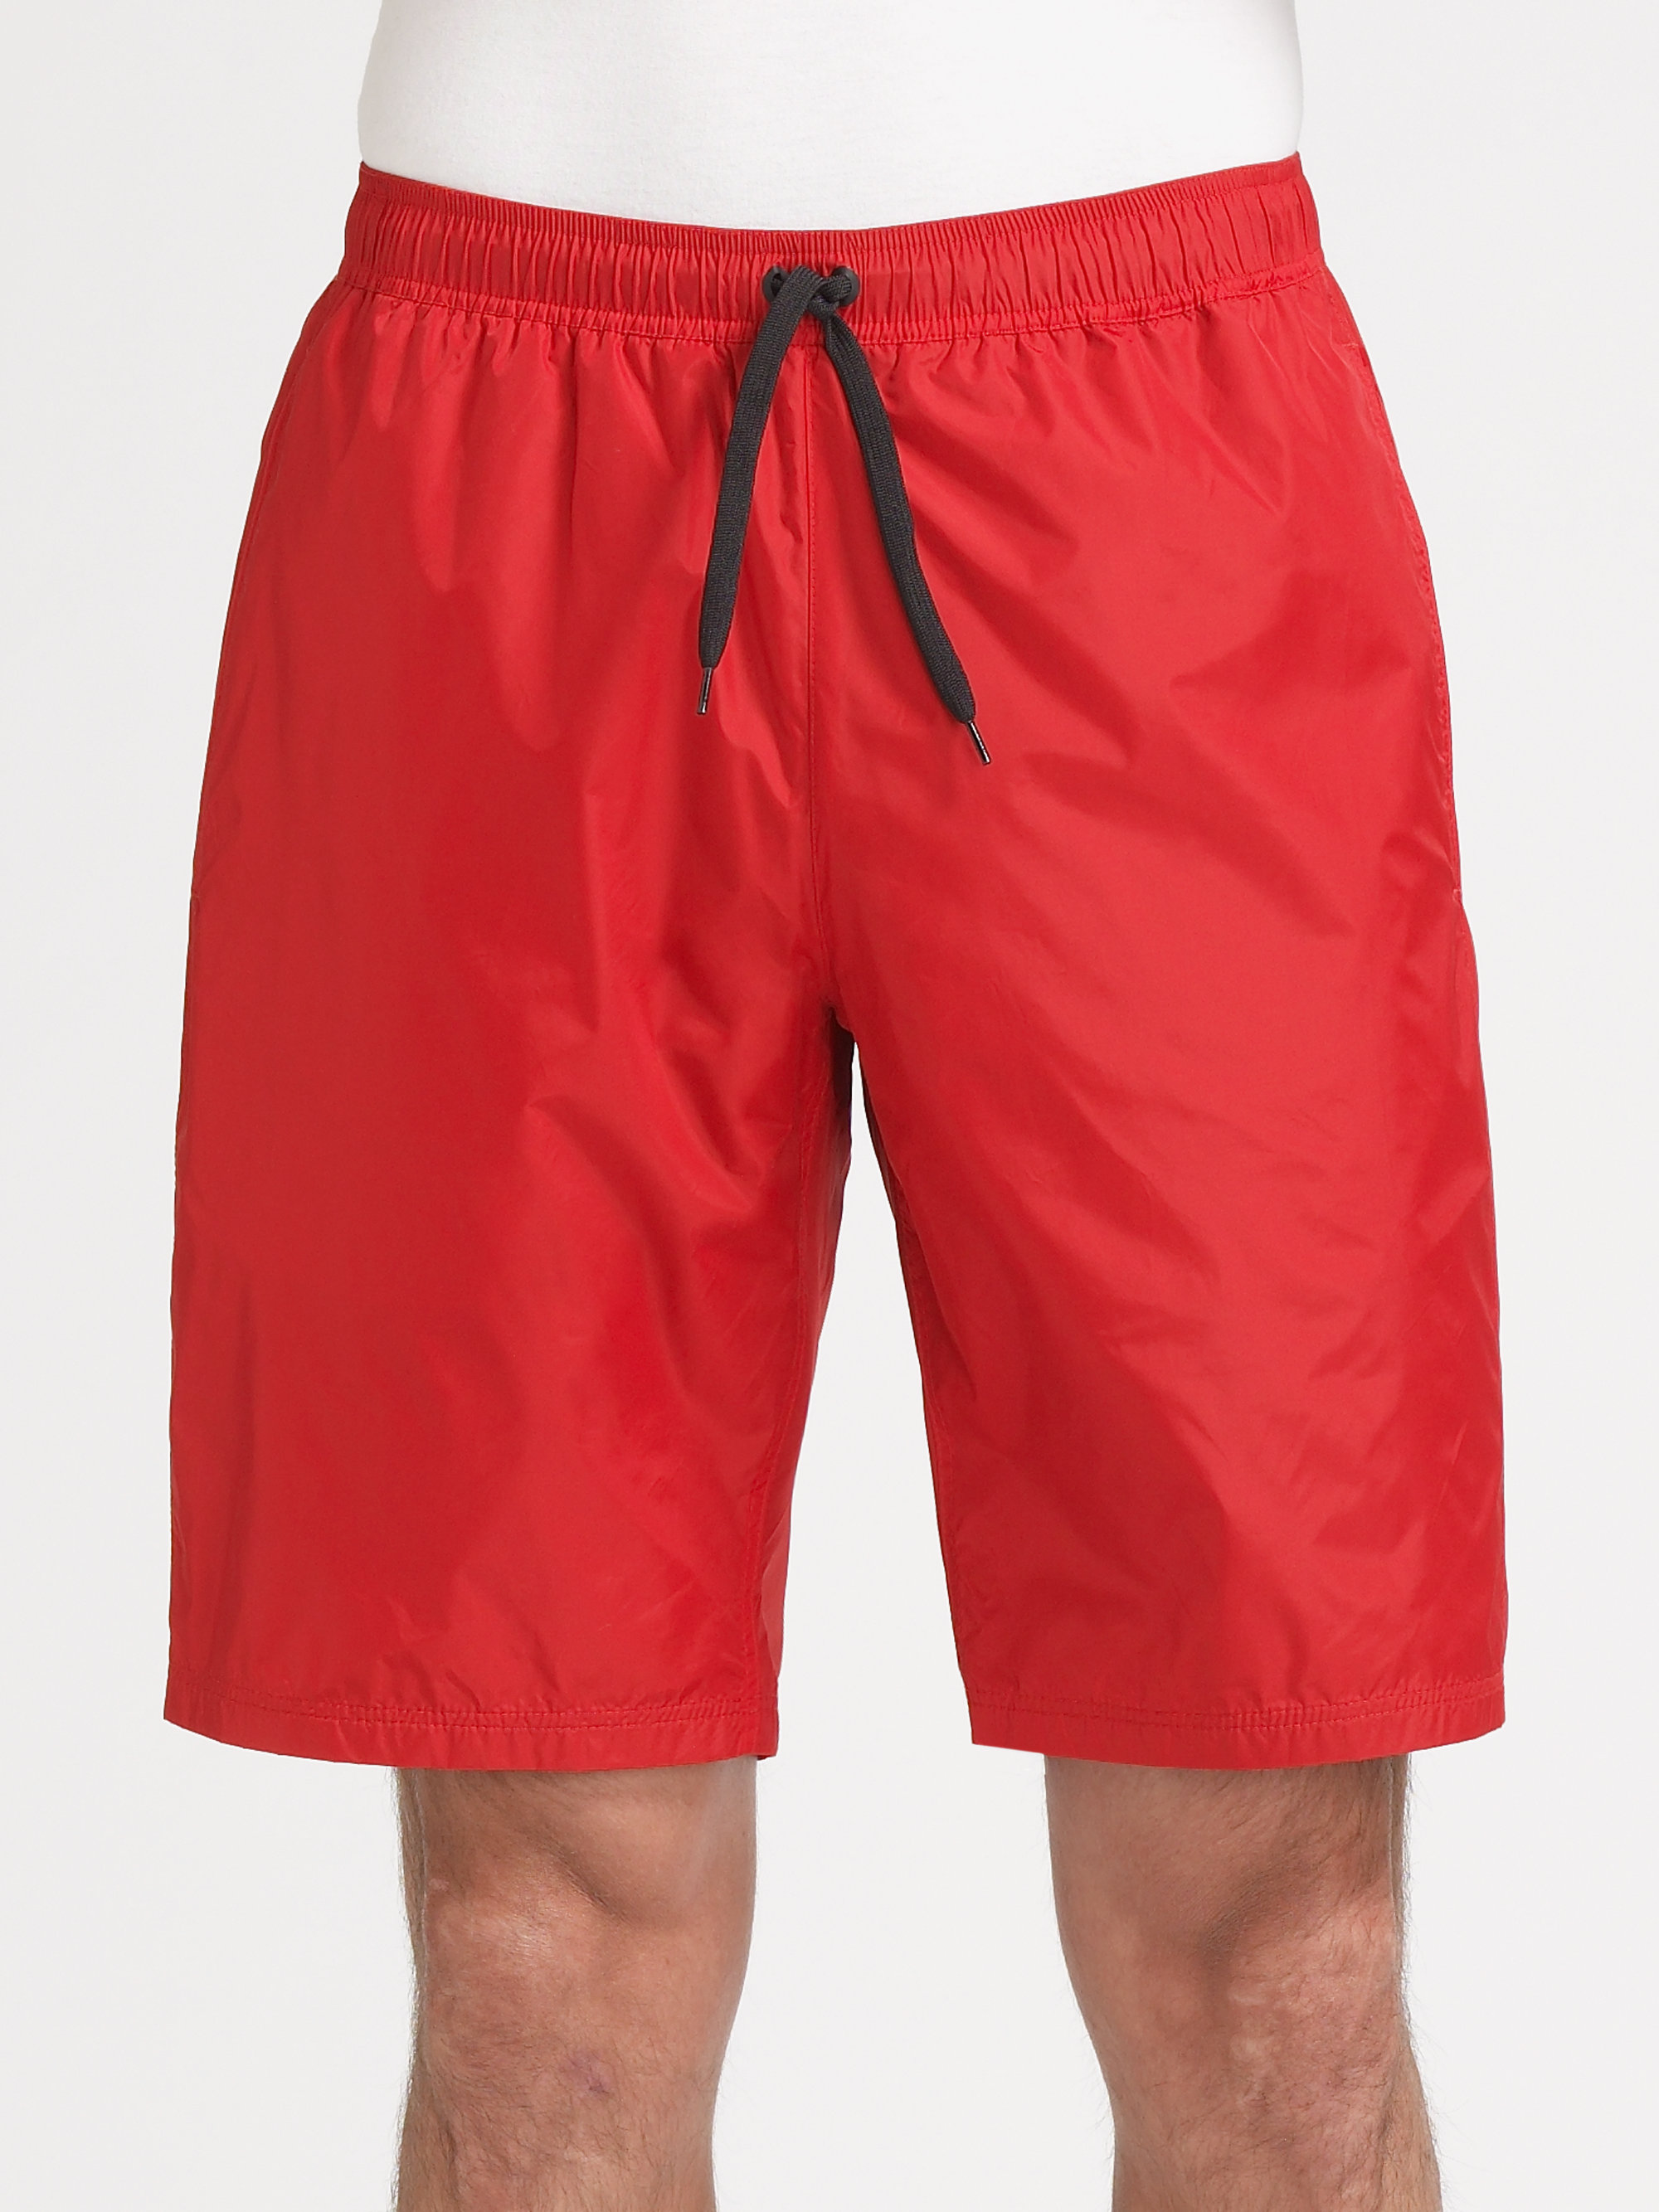 Burberry Nylon Shorts in Red for Men - Lyst